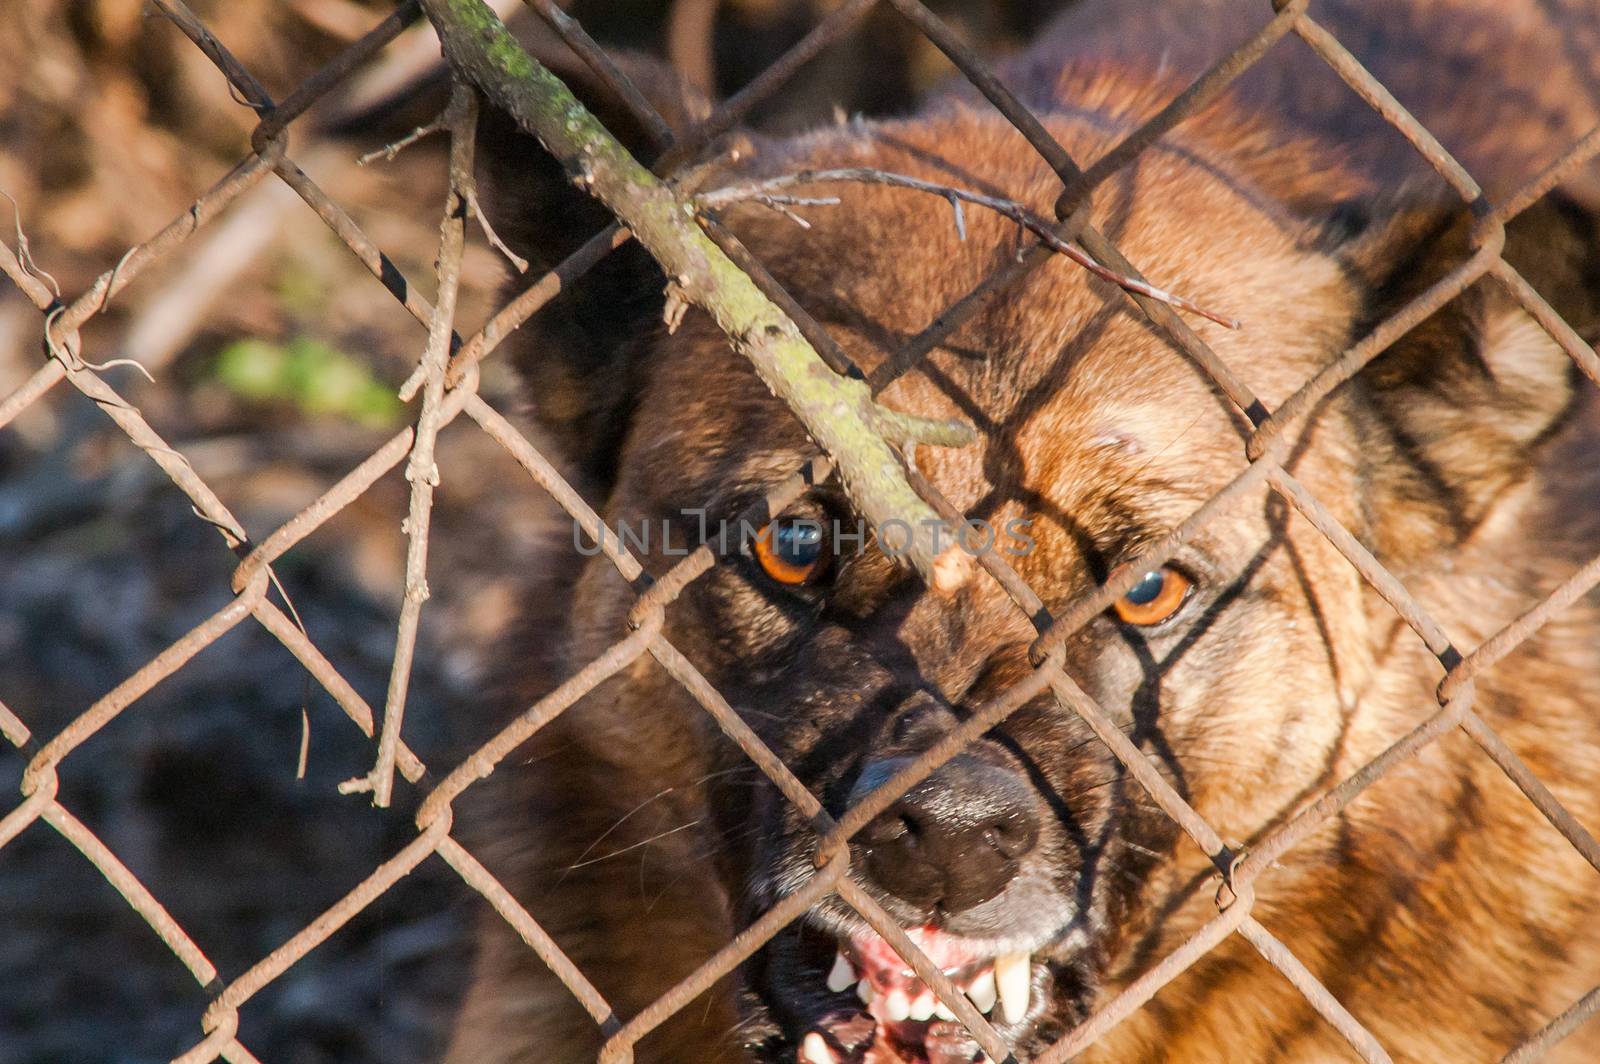 vicious dog bite-catching by antonius_